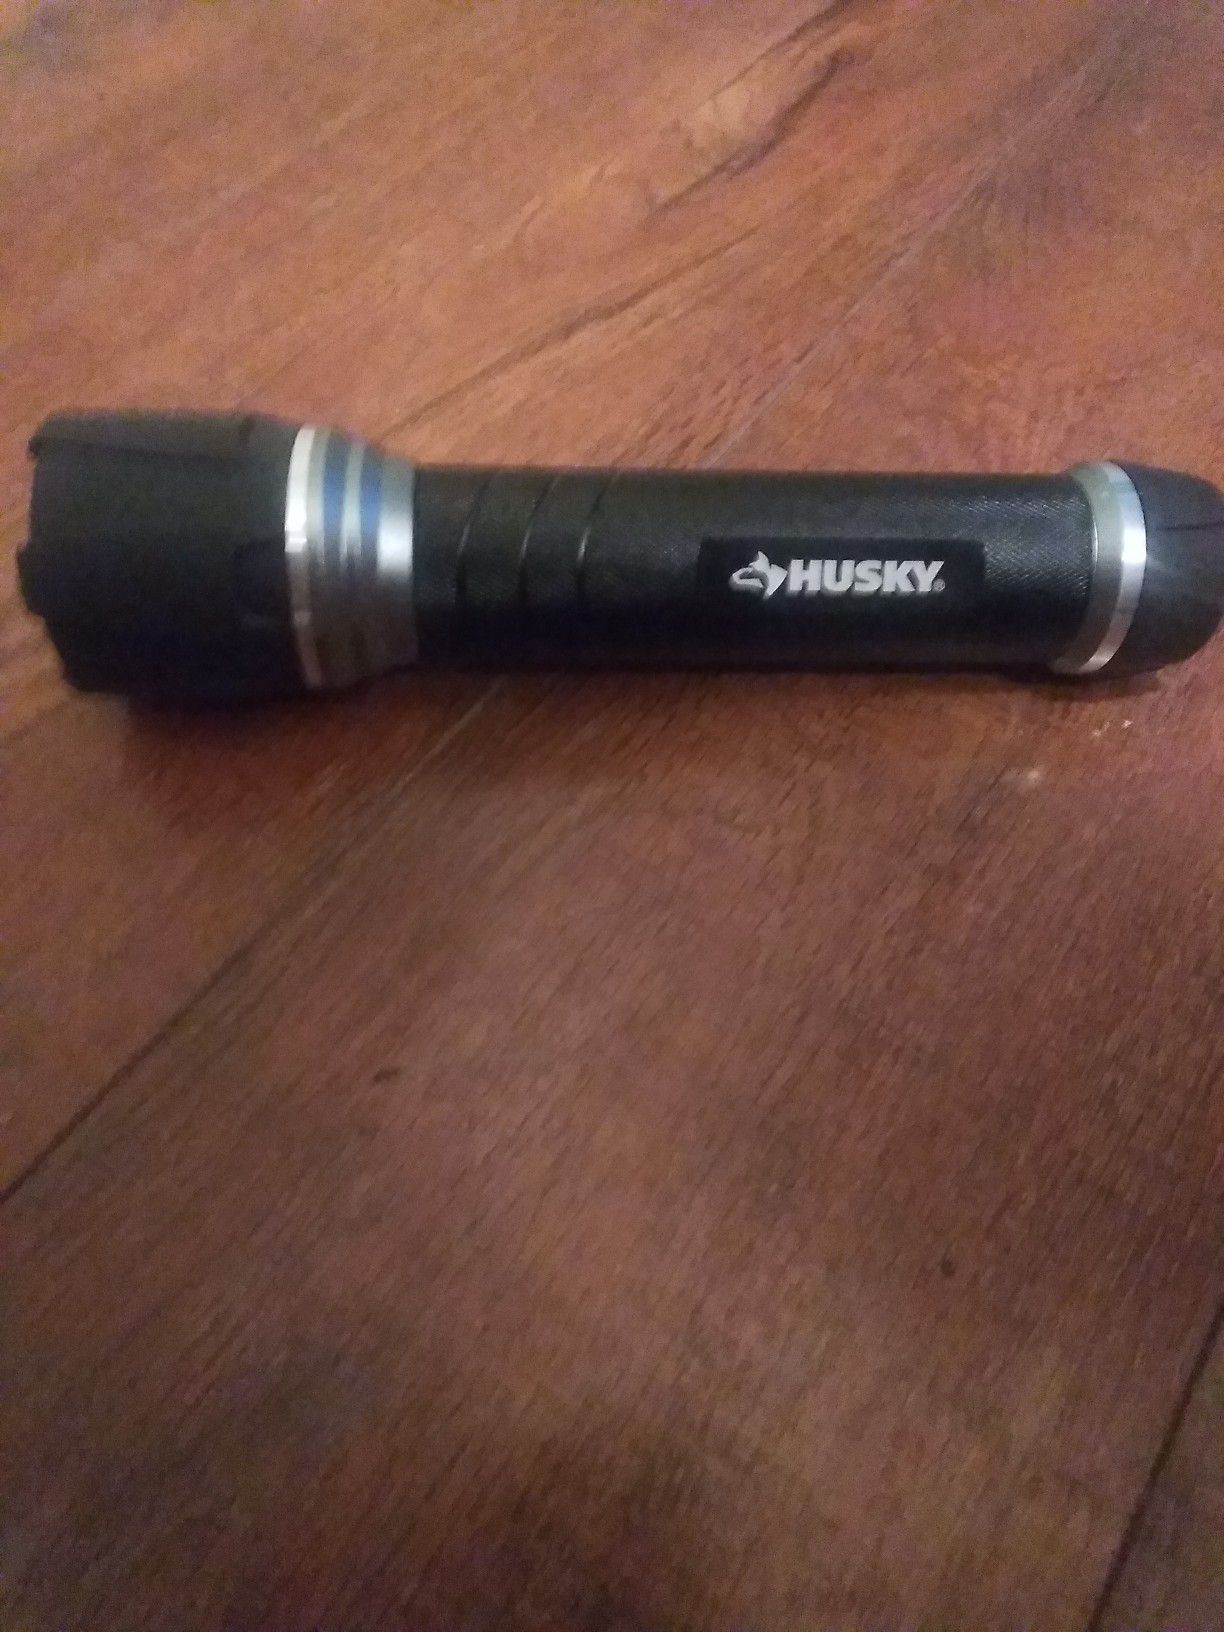 Husky flashlight